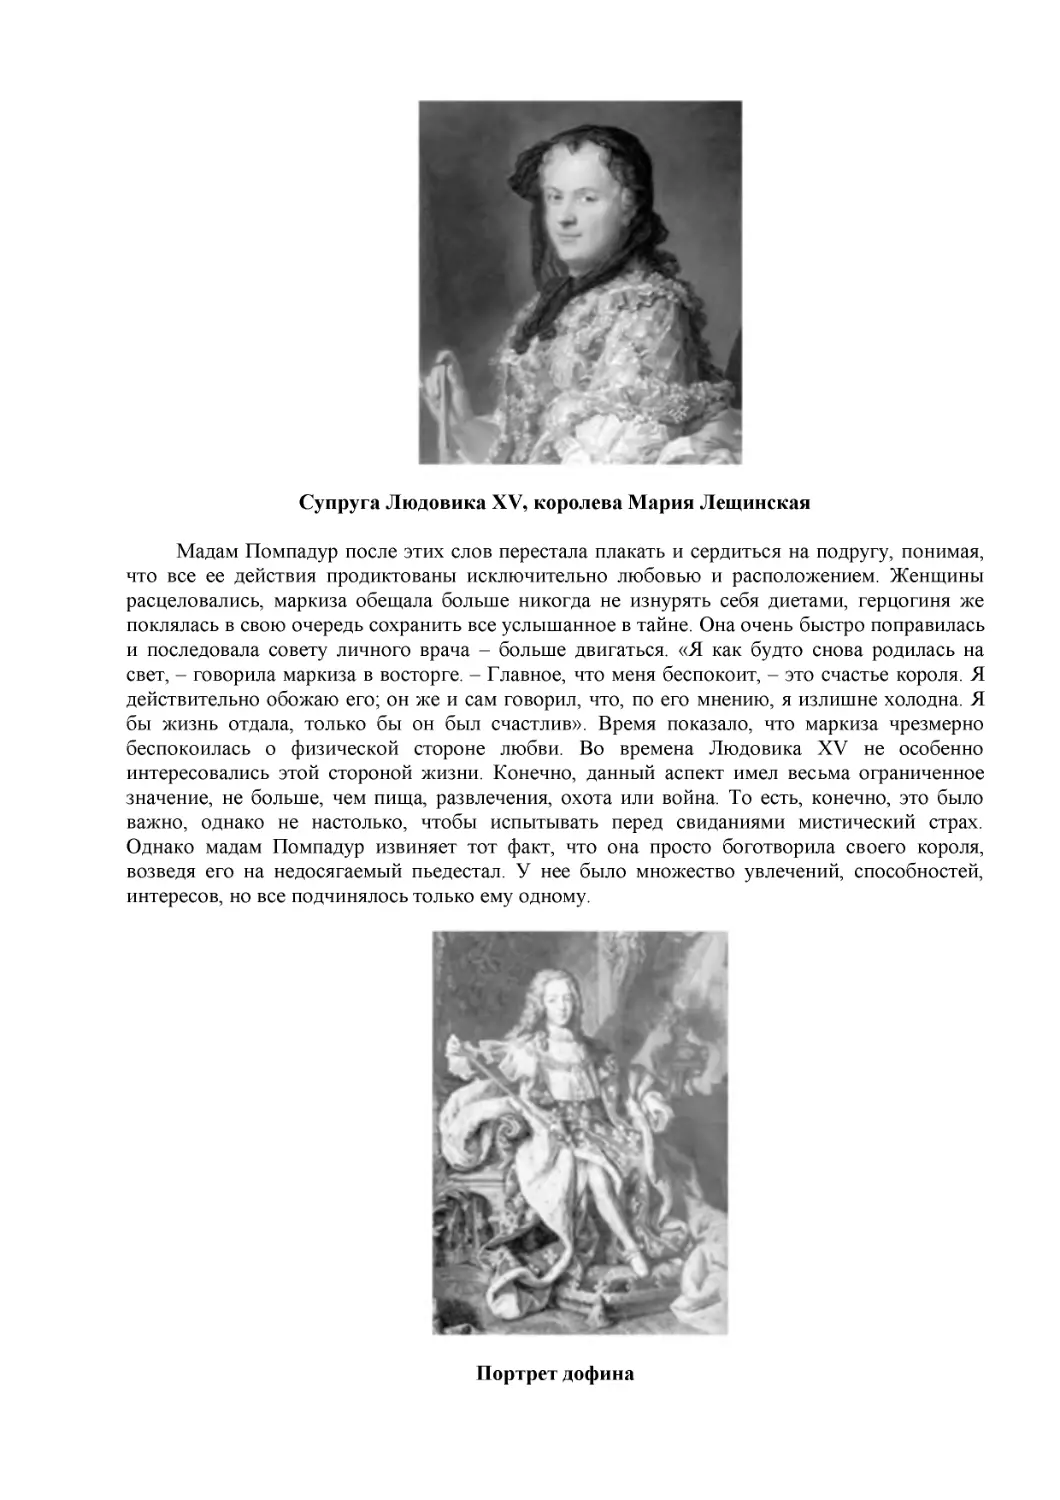 Супруга Людовика XV, королева Мария Лещинская
Портрет дофина